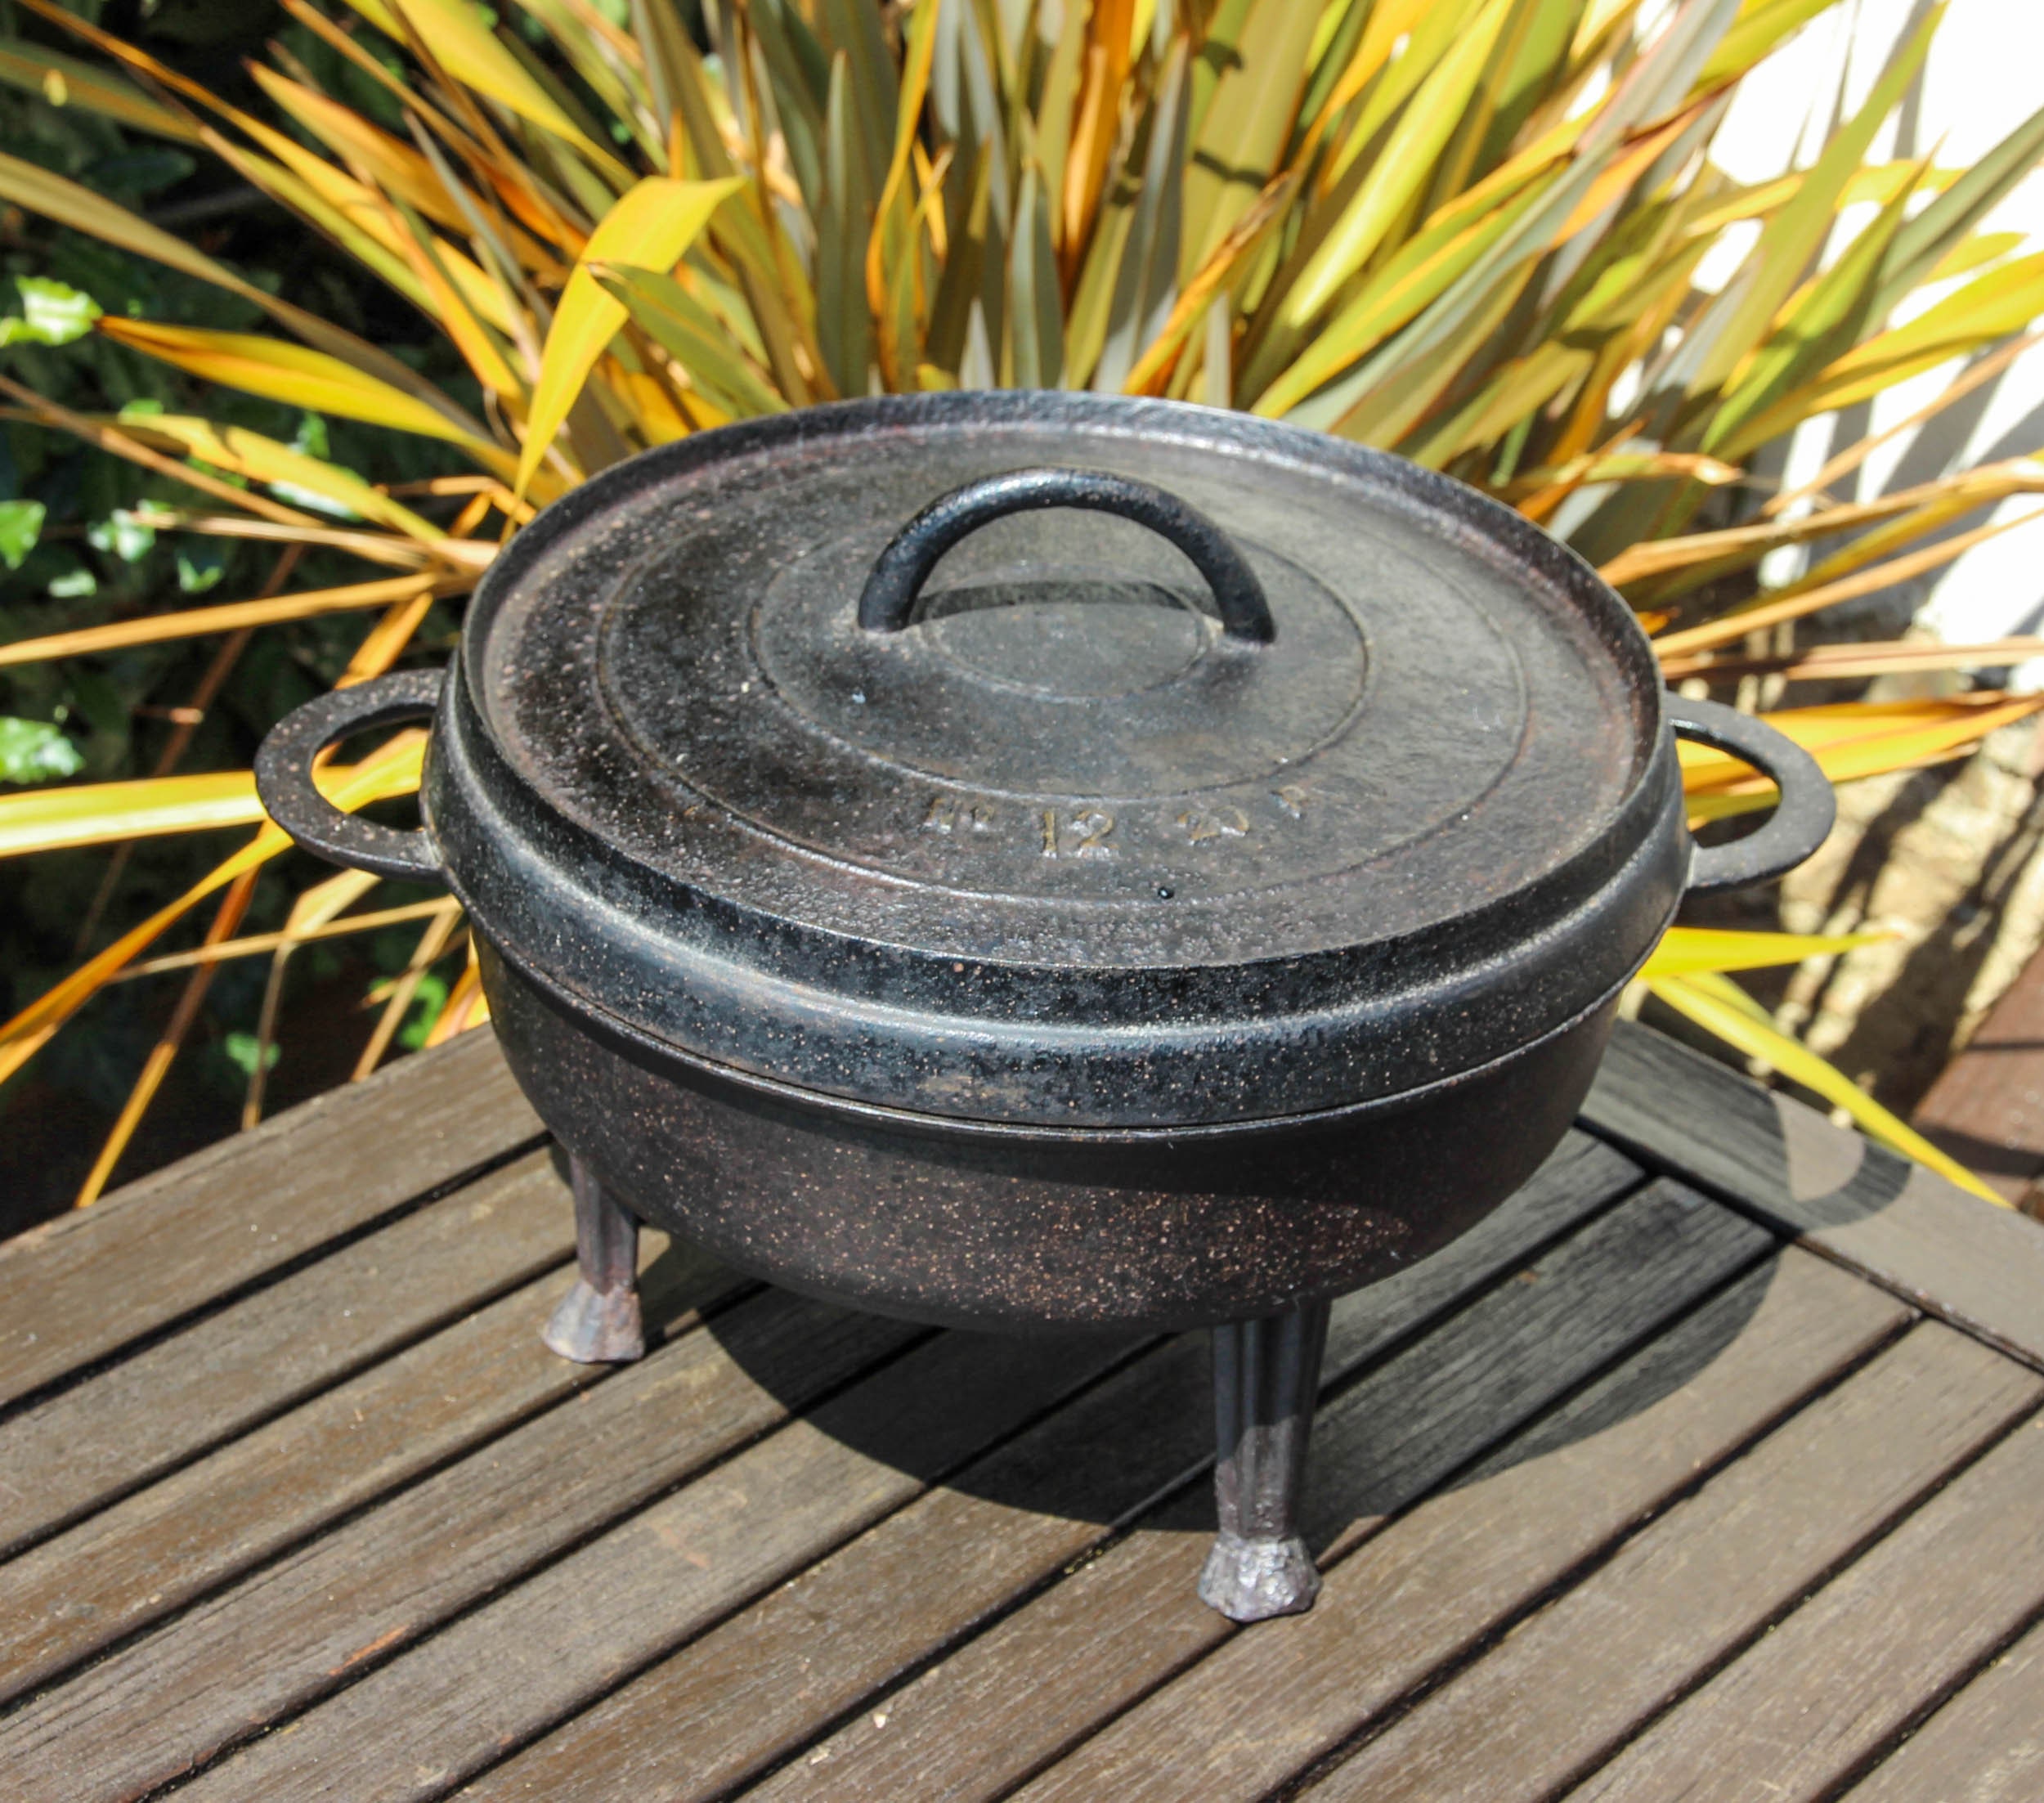 Vntg Large Cast Iron Dutch Oven Large Pot Cauldron Tripod legs chili a